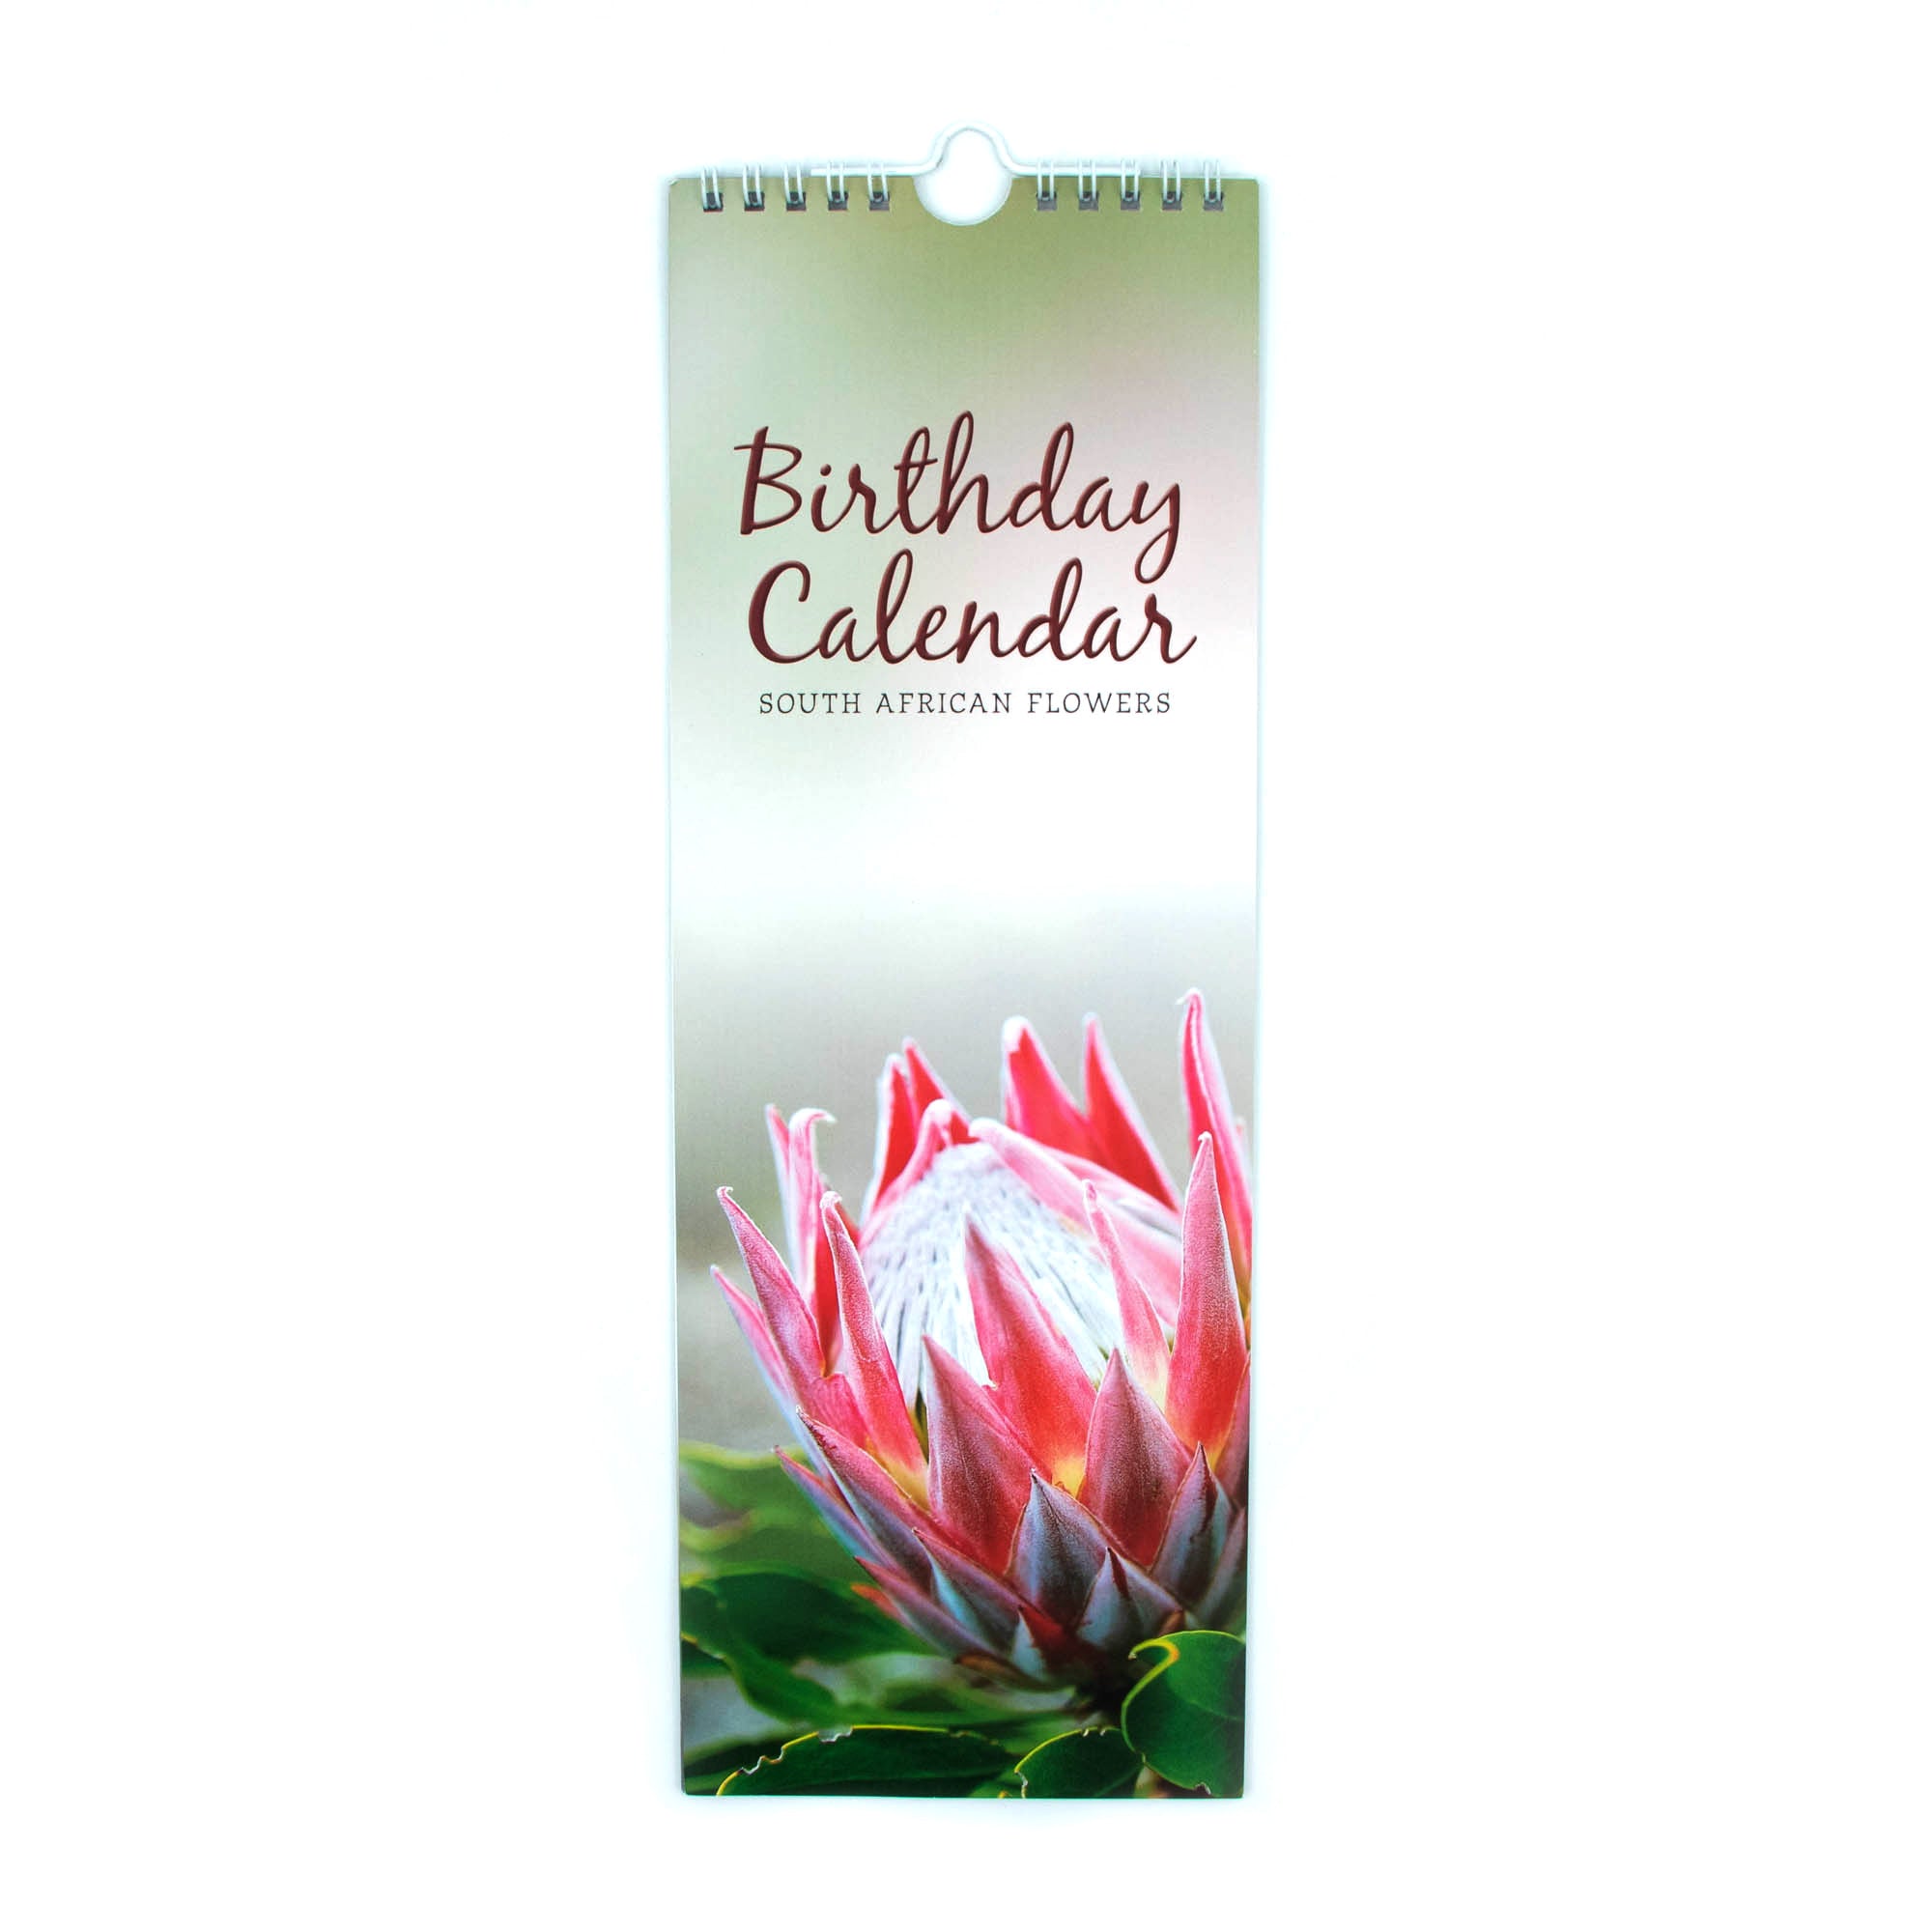 South African Flowers Birthday Calendar